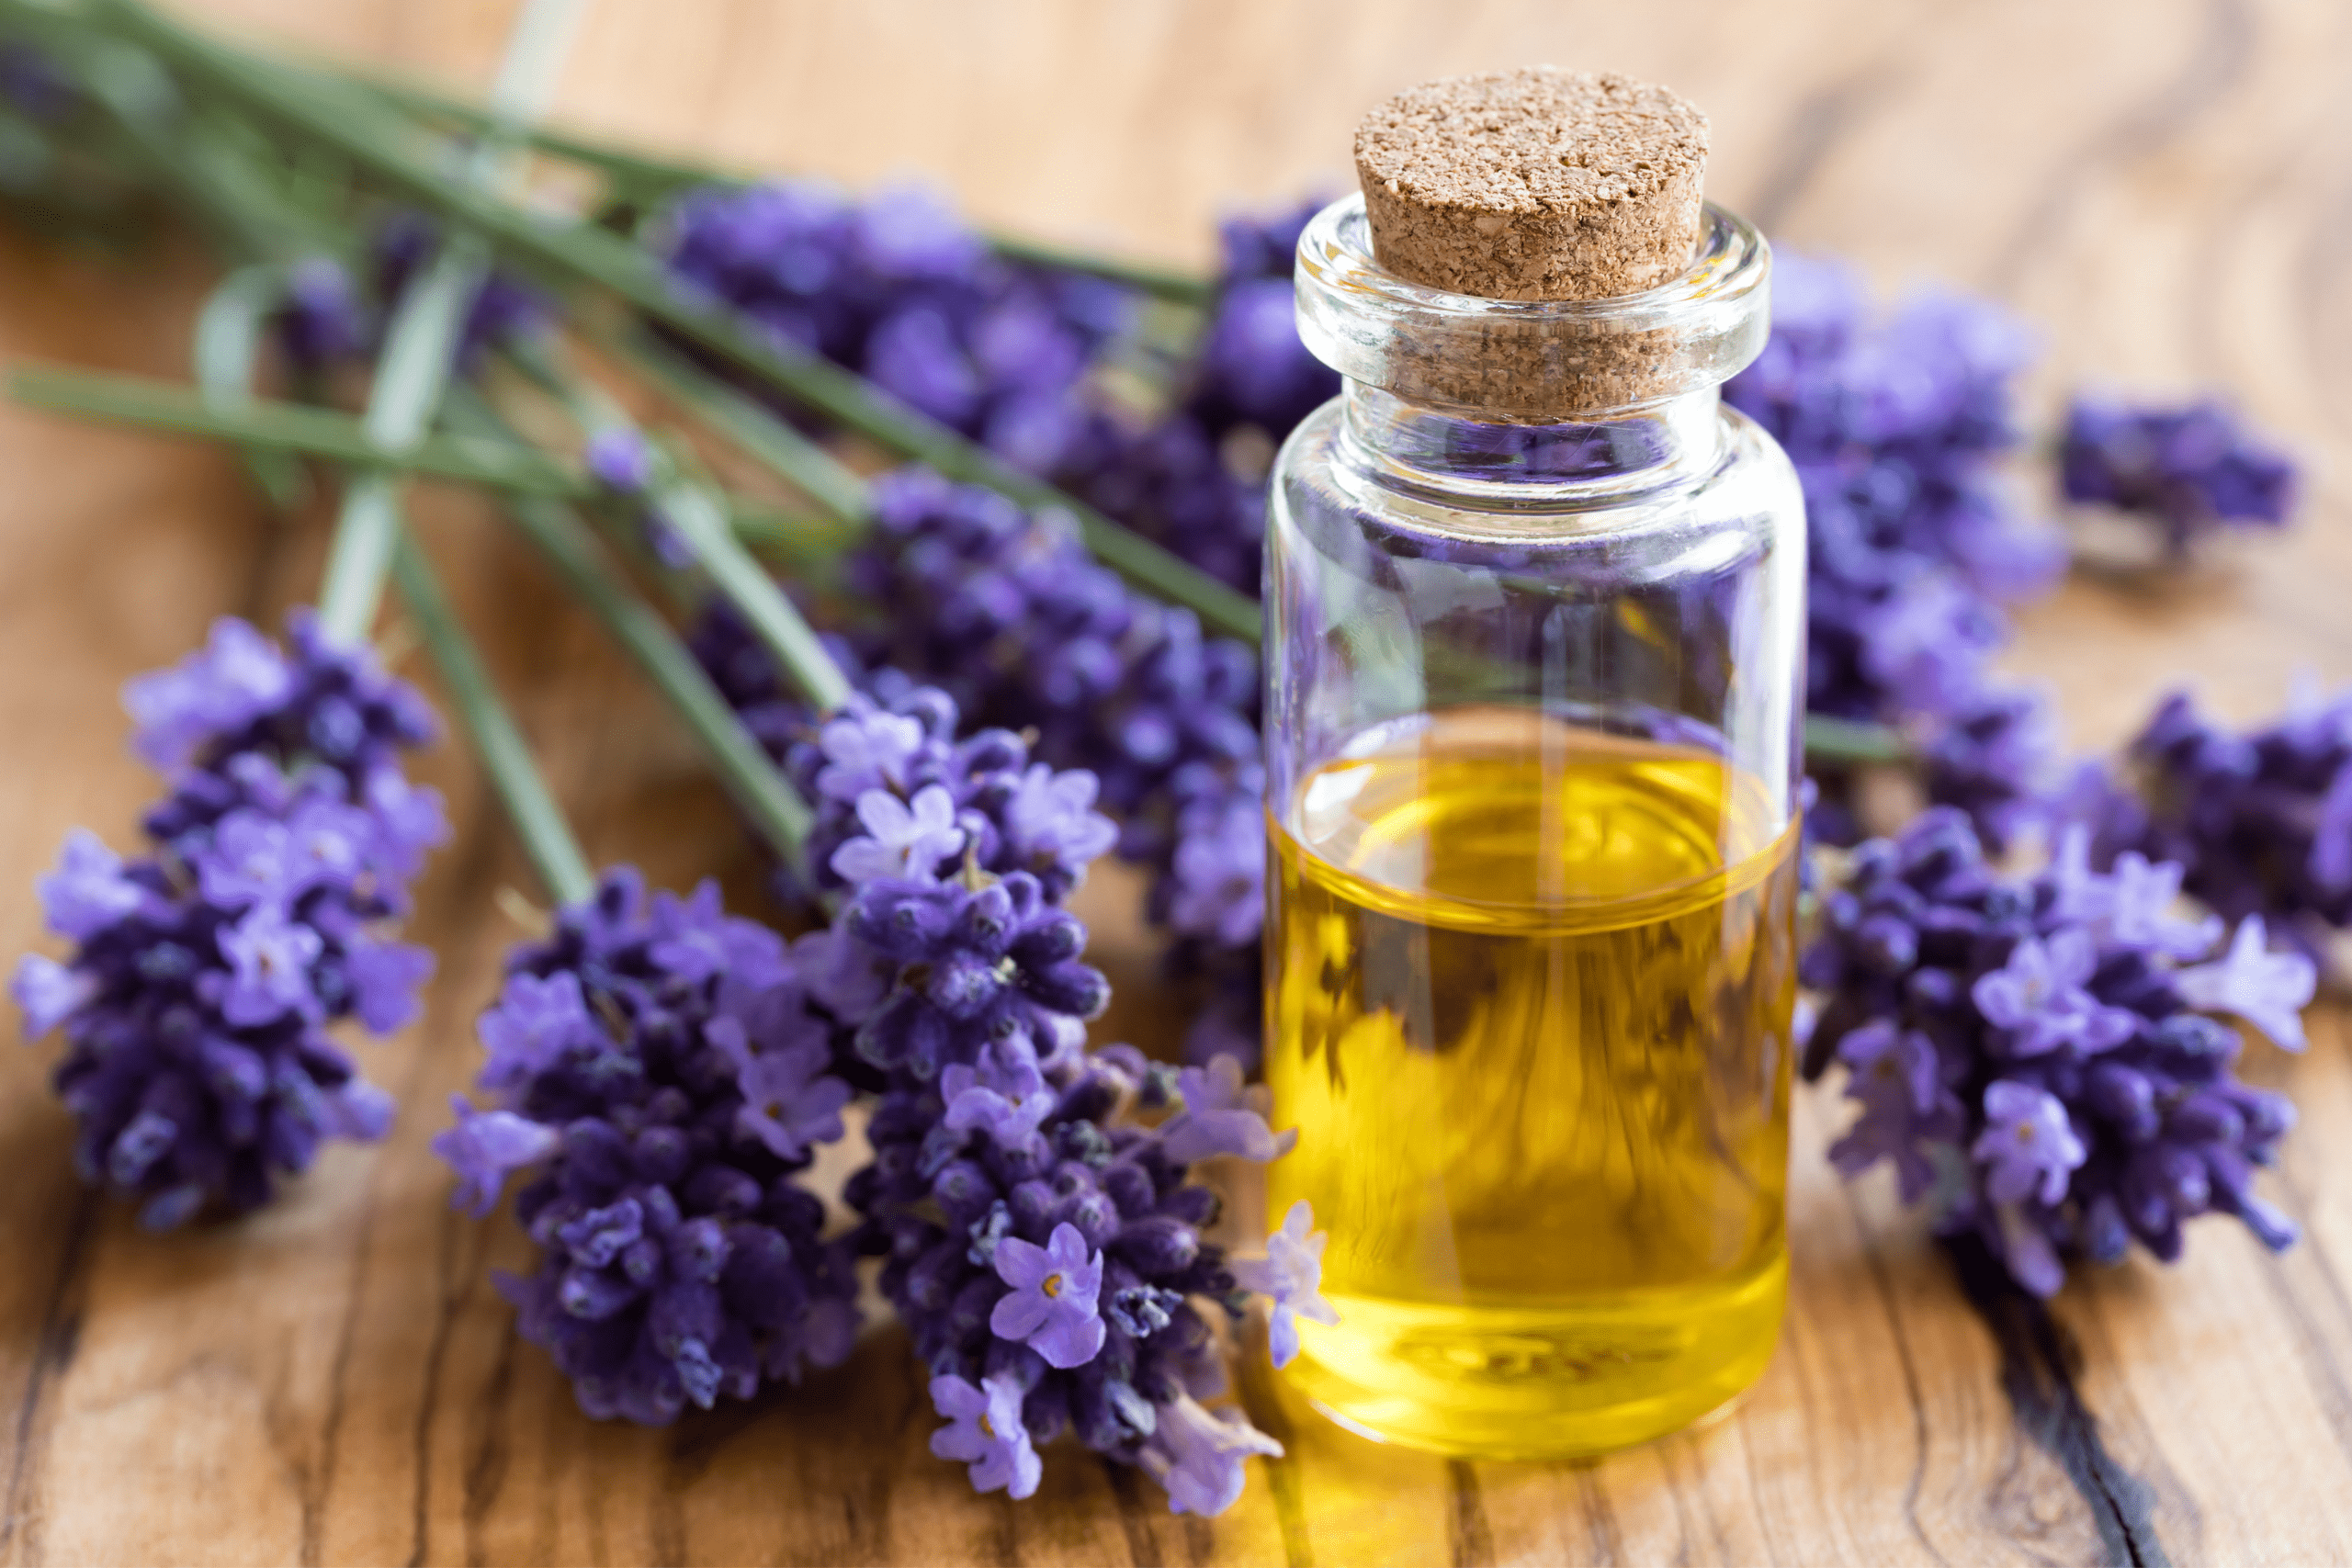 Lavender With An Essential Oils Bottle & Cork Lid